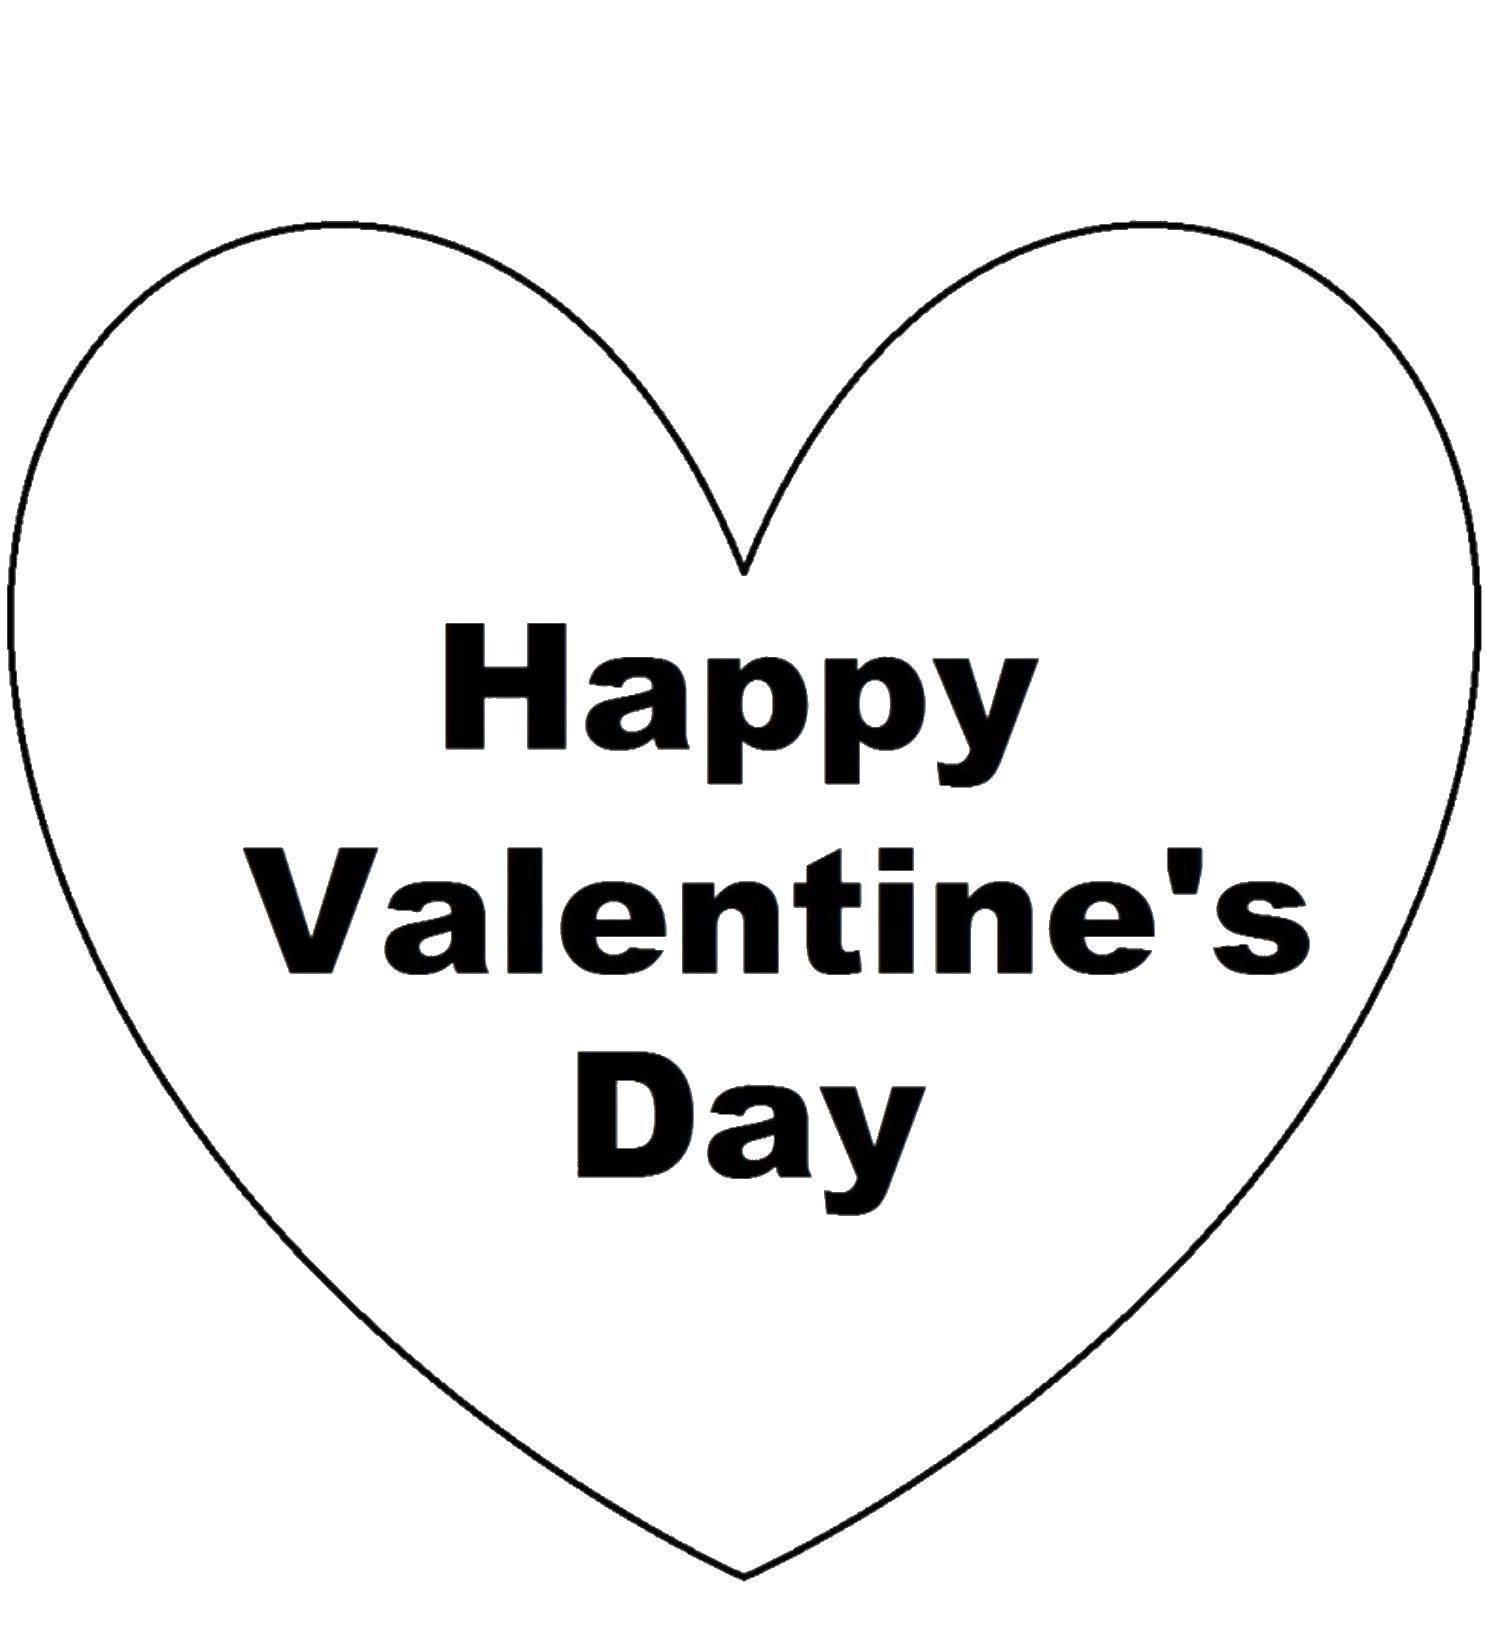 Название: Раскраска С днем святого валентина. Категория: праздник. Теги: праздник, день Святого Валентина, любовь, сердце.